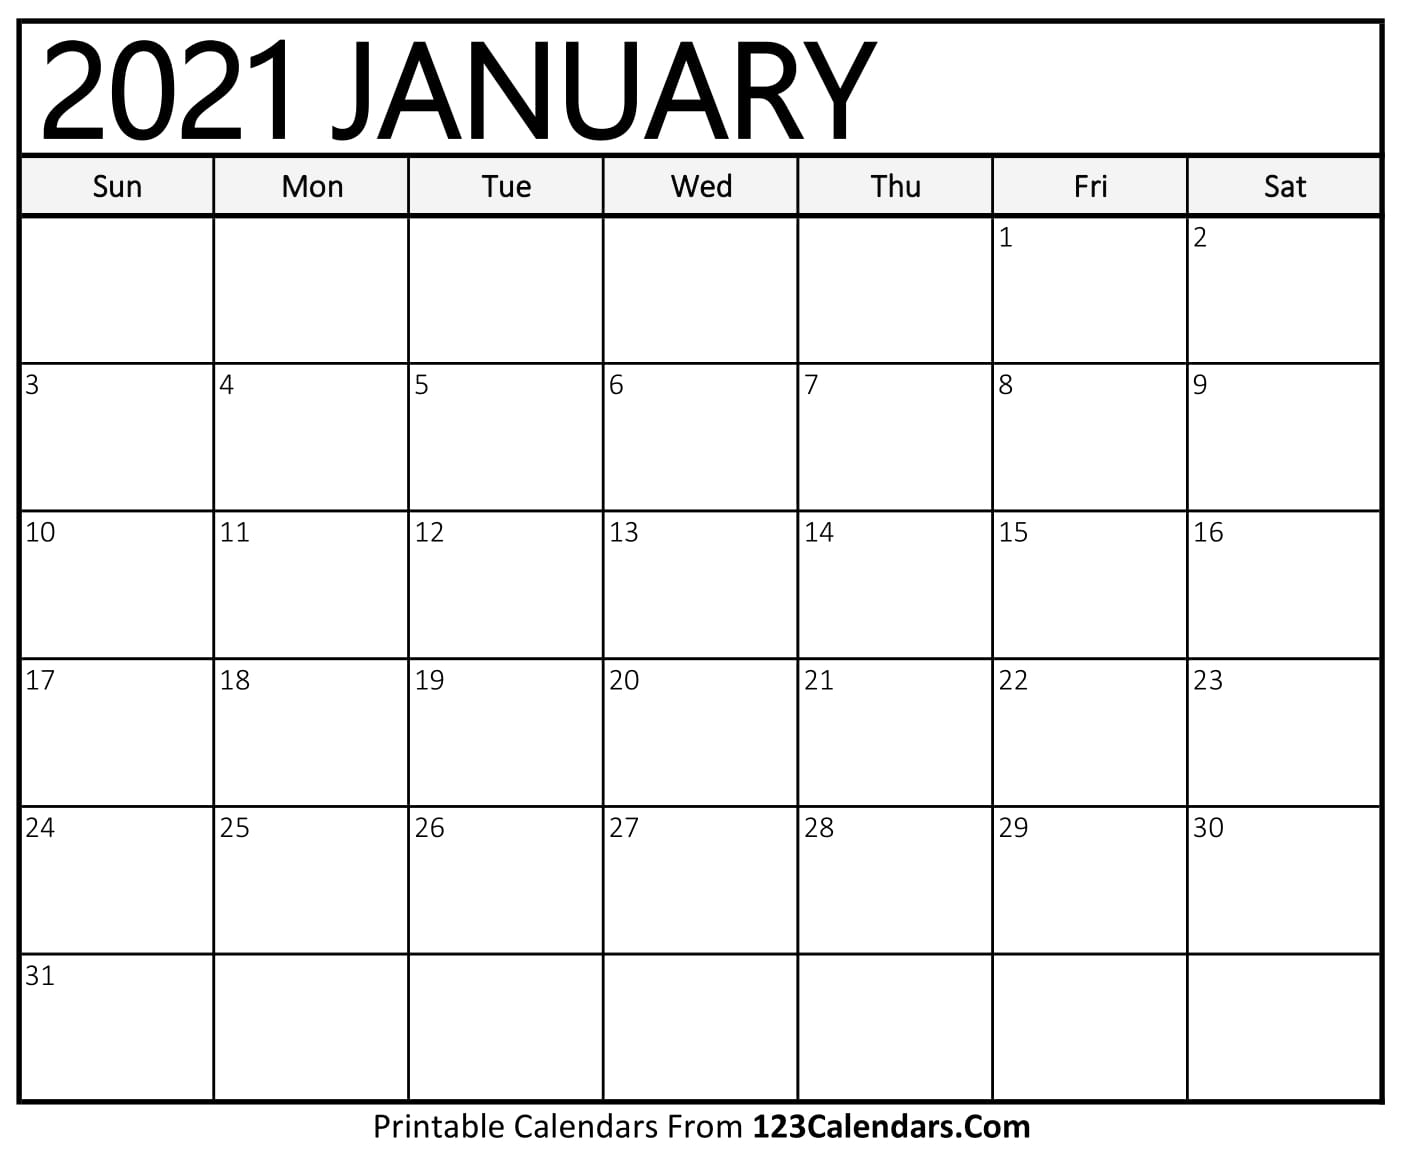 Lined Calendar 2021 Free Printable | Month Calendar Printable regarding 2021 Printable Calendar By Month With Lines